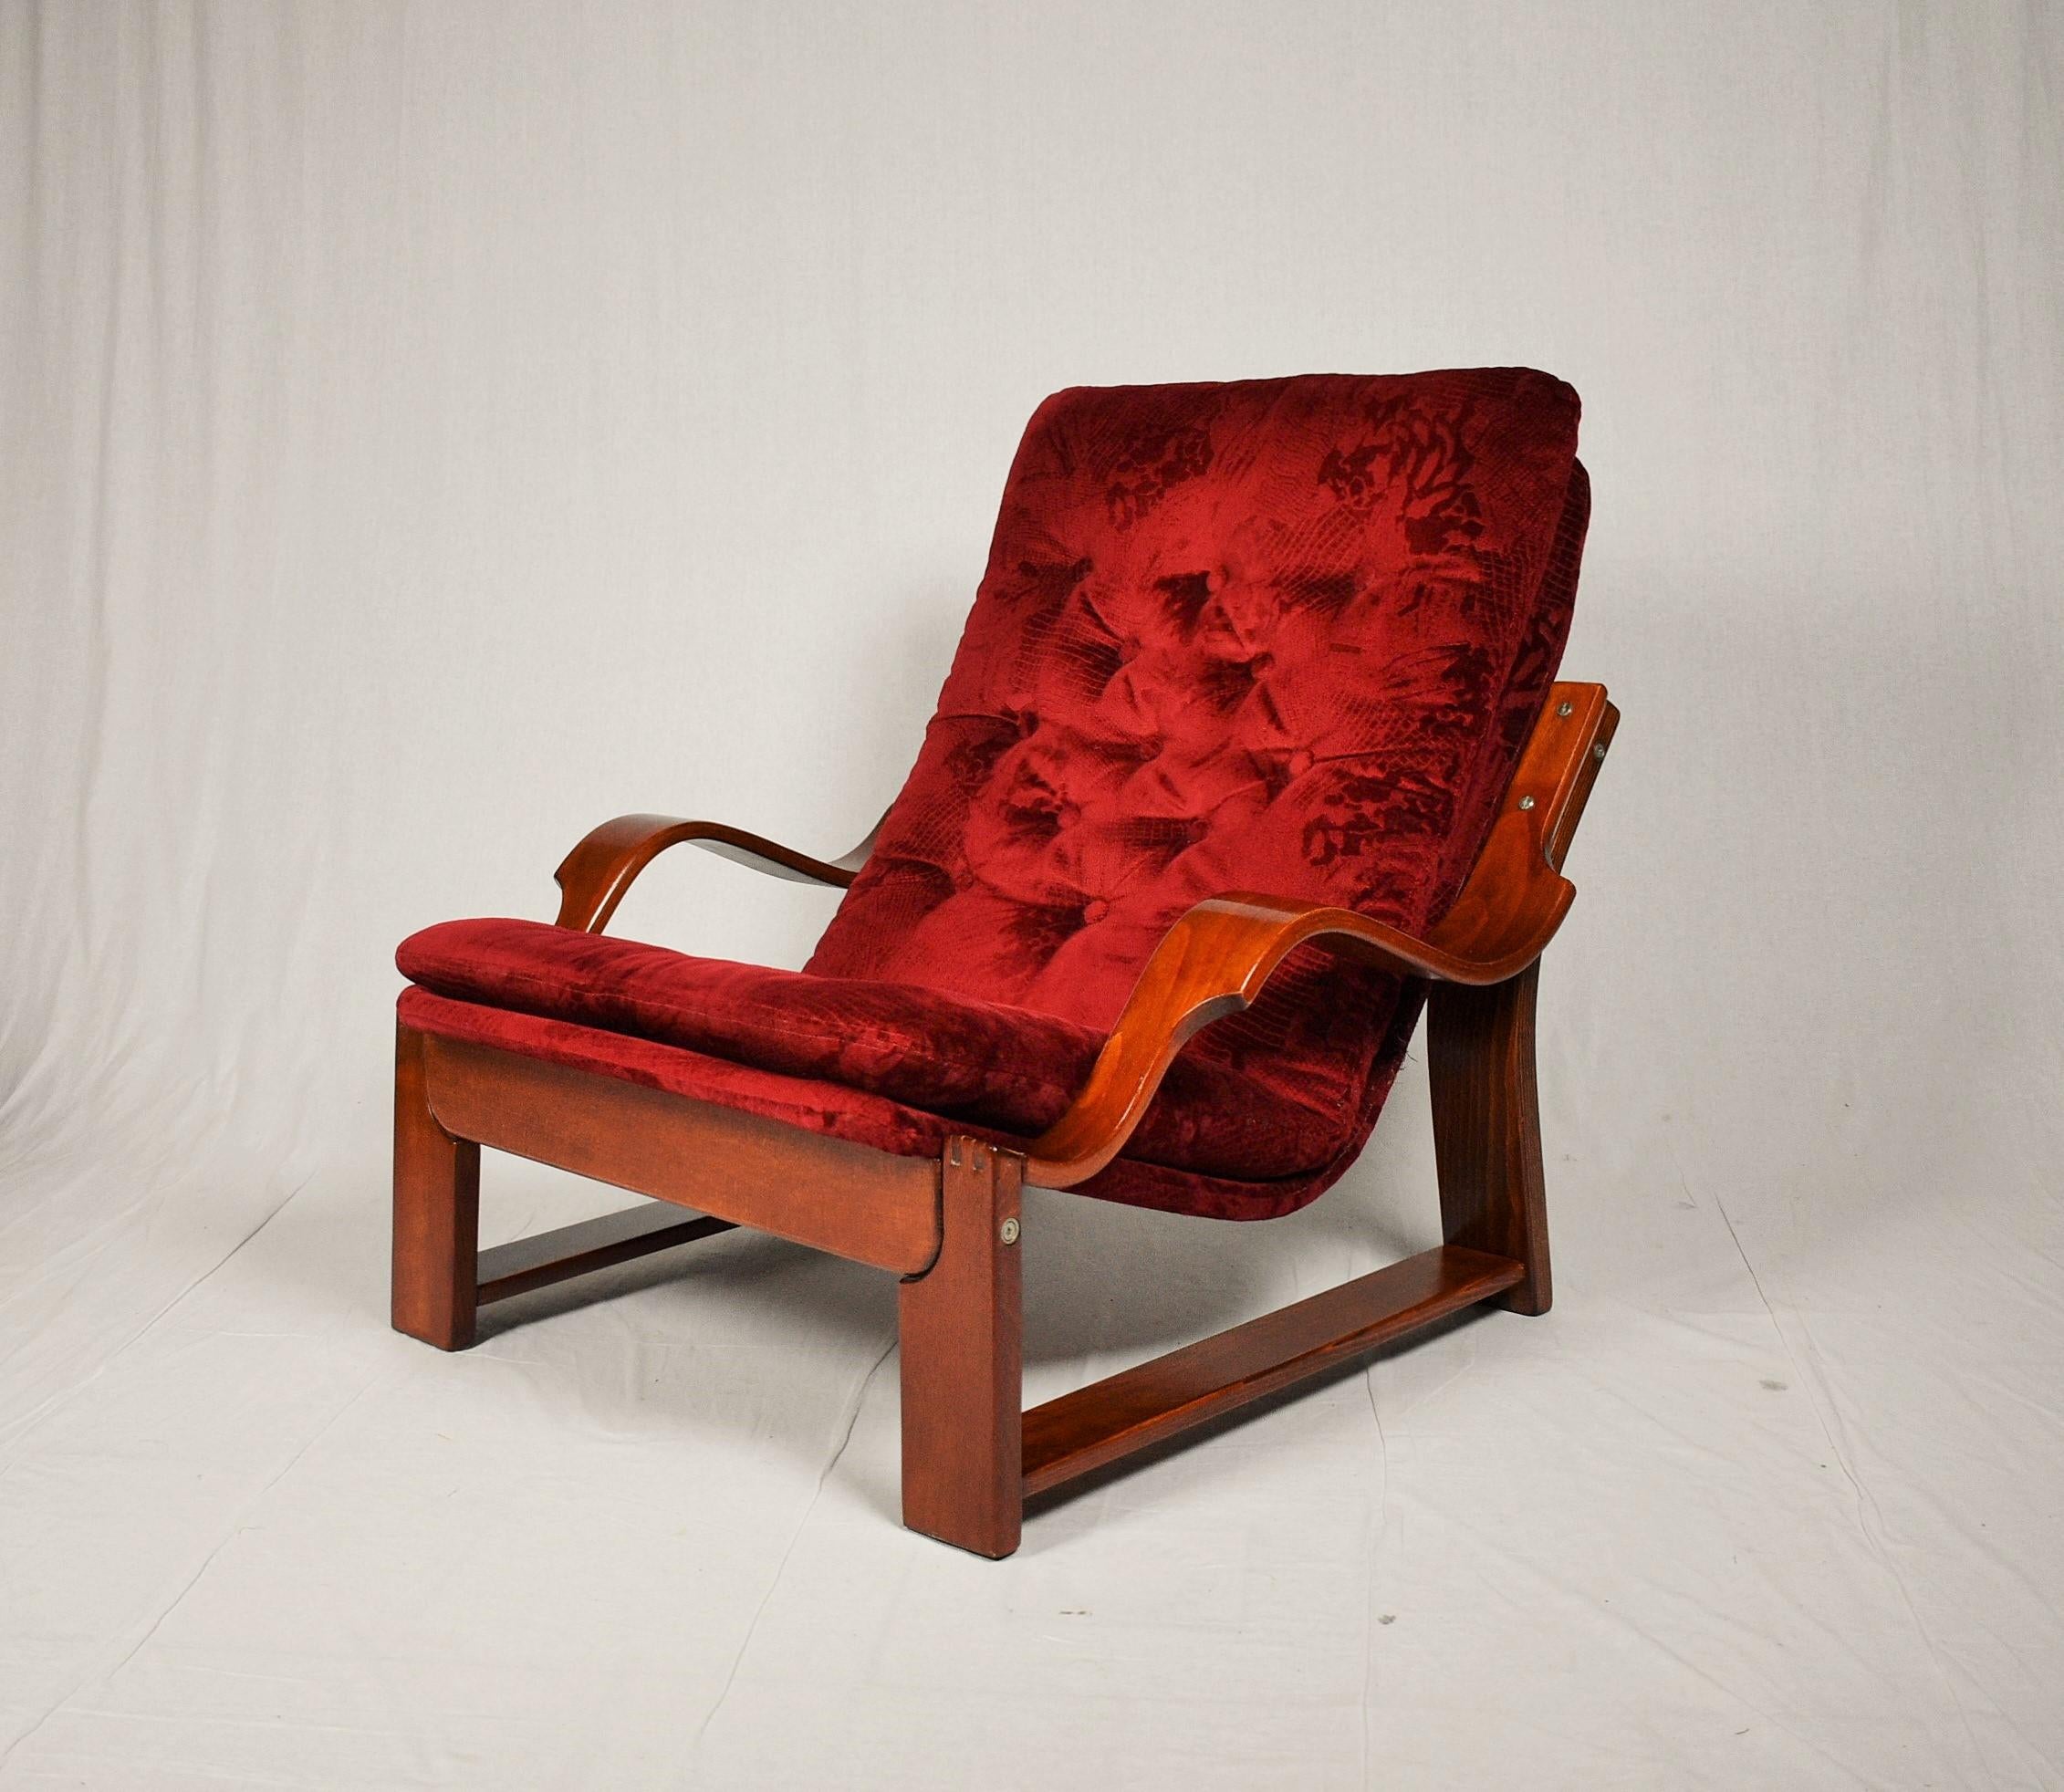 - Made of wood, fabric
- Good, original upholstery
- Good, original condition.
   